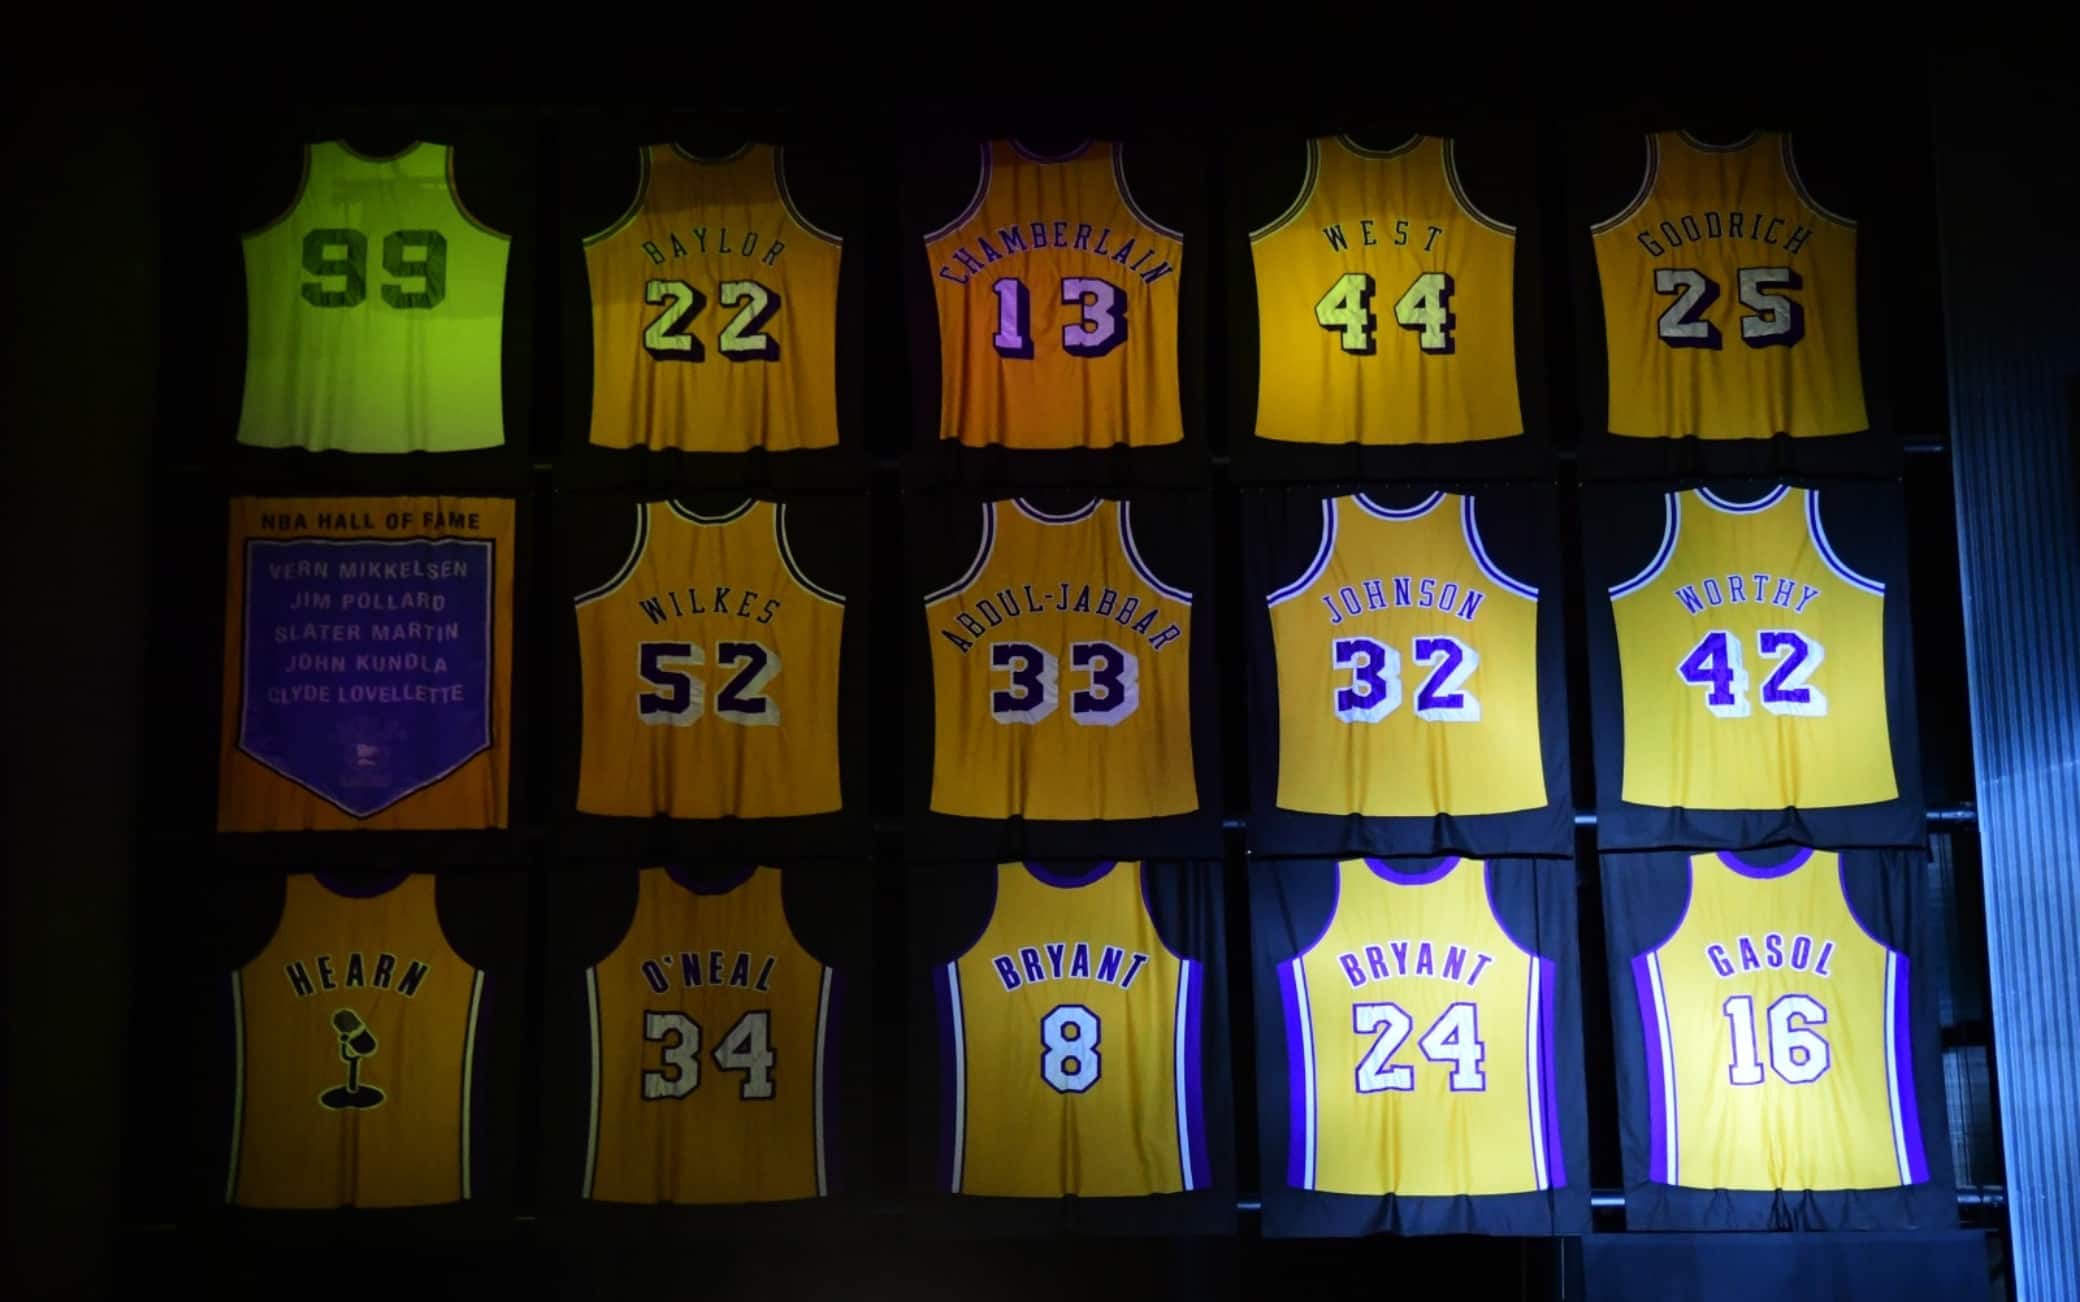 NBA iconic numbers: #41 – Dirk Nowitzki and Wes Unseld, NBA News